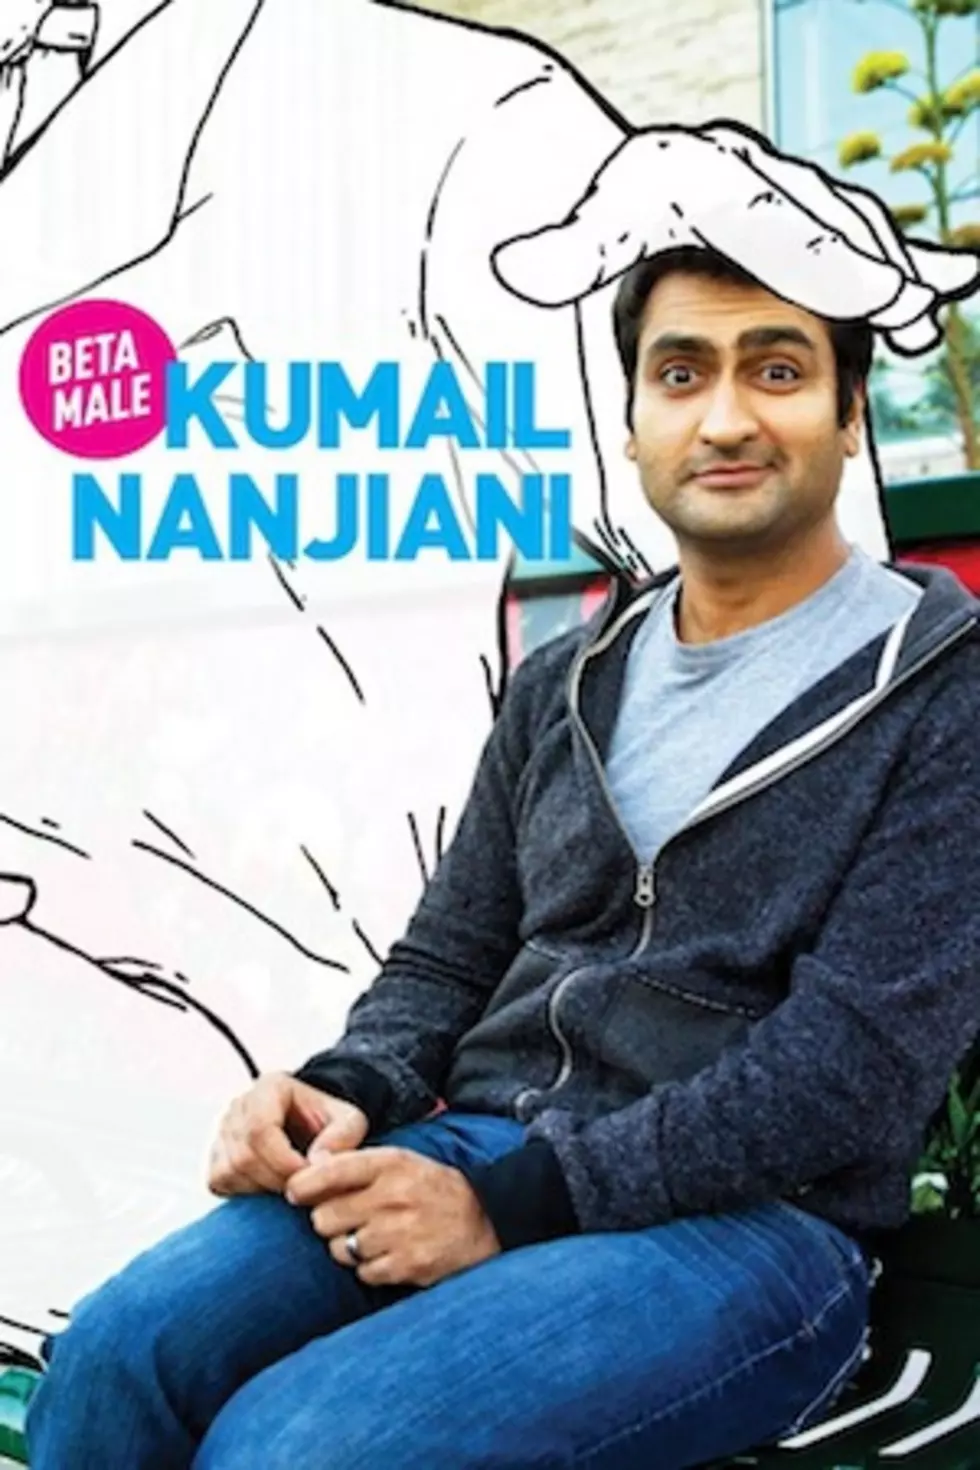 How to Be a &#8216;Beta Male&#8217; &#8212; With Comedian Kumail Nanjiani